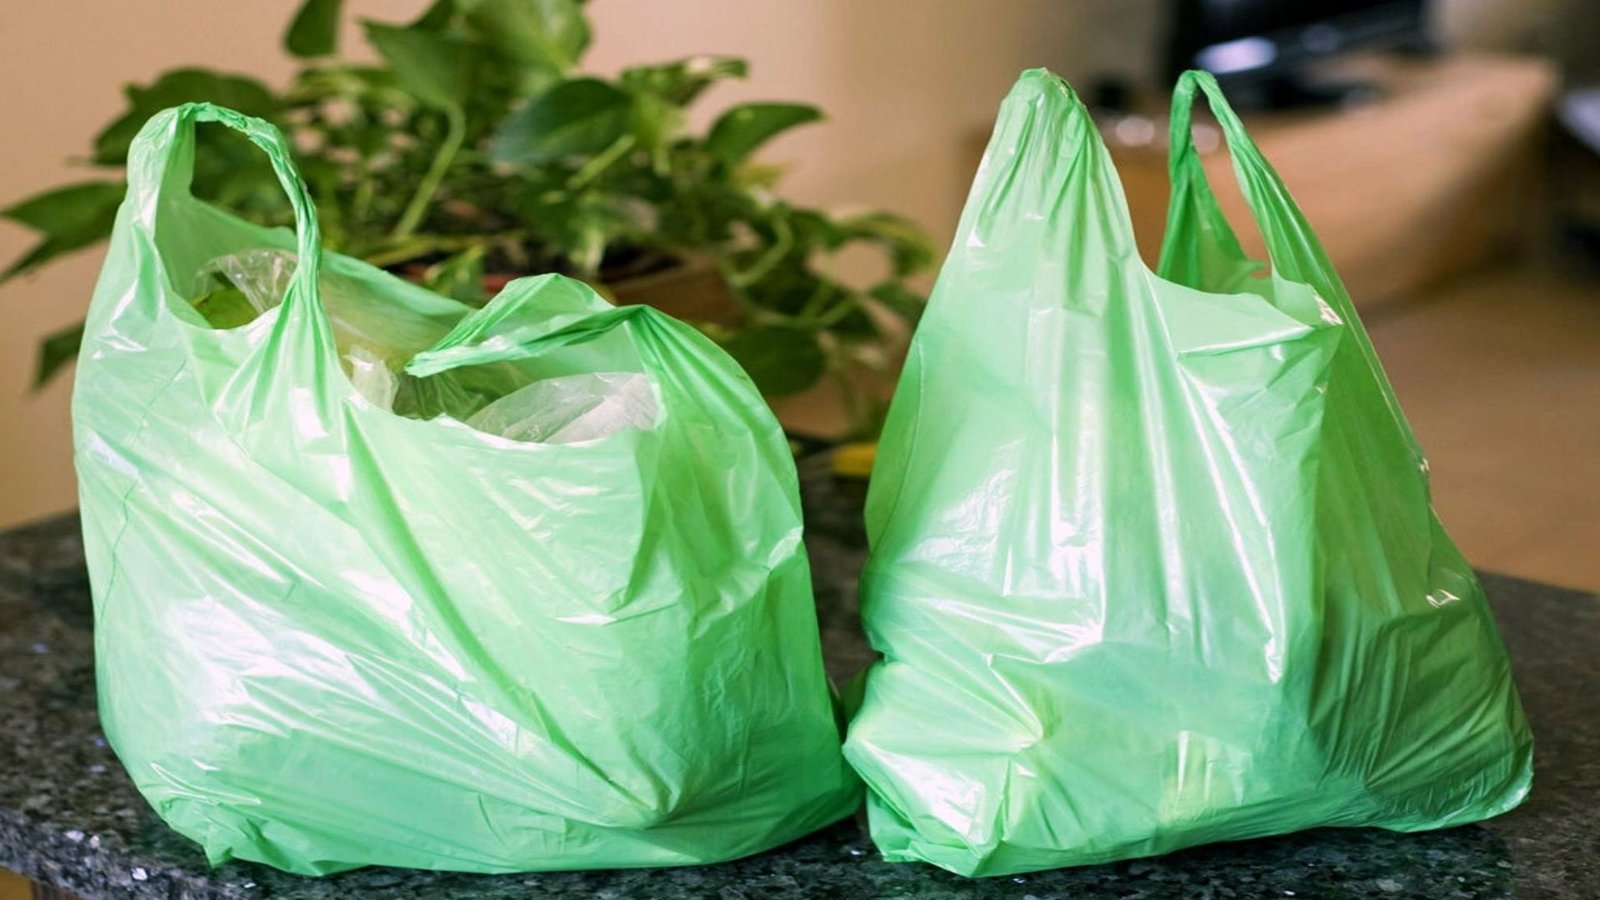 Punjab Bans Plastic Bags